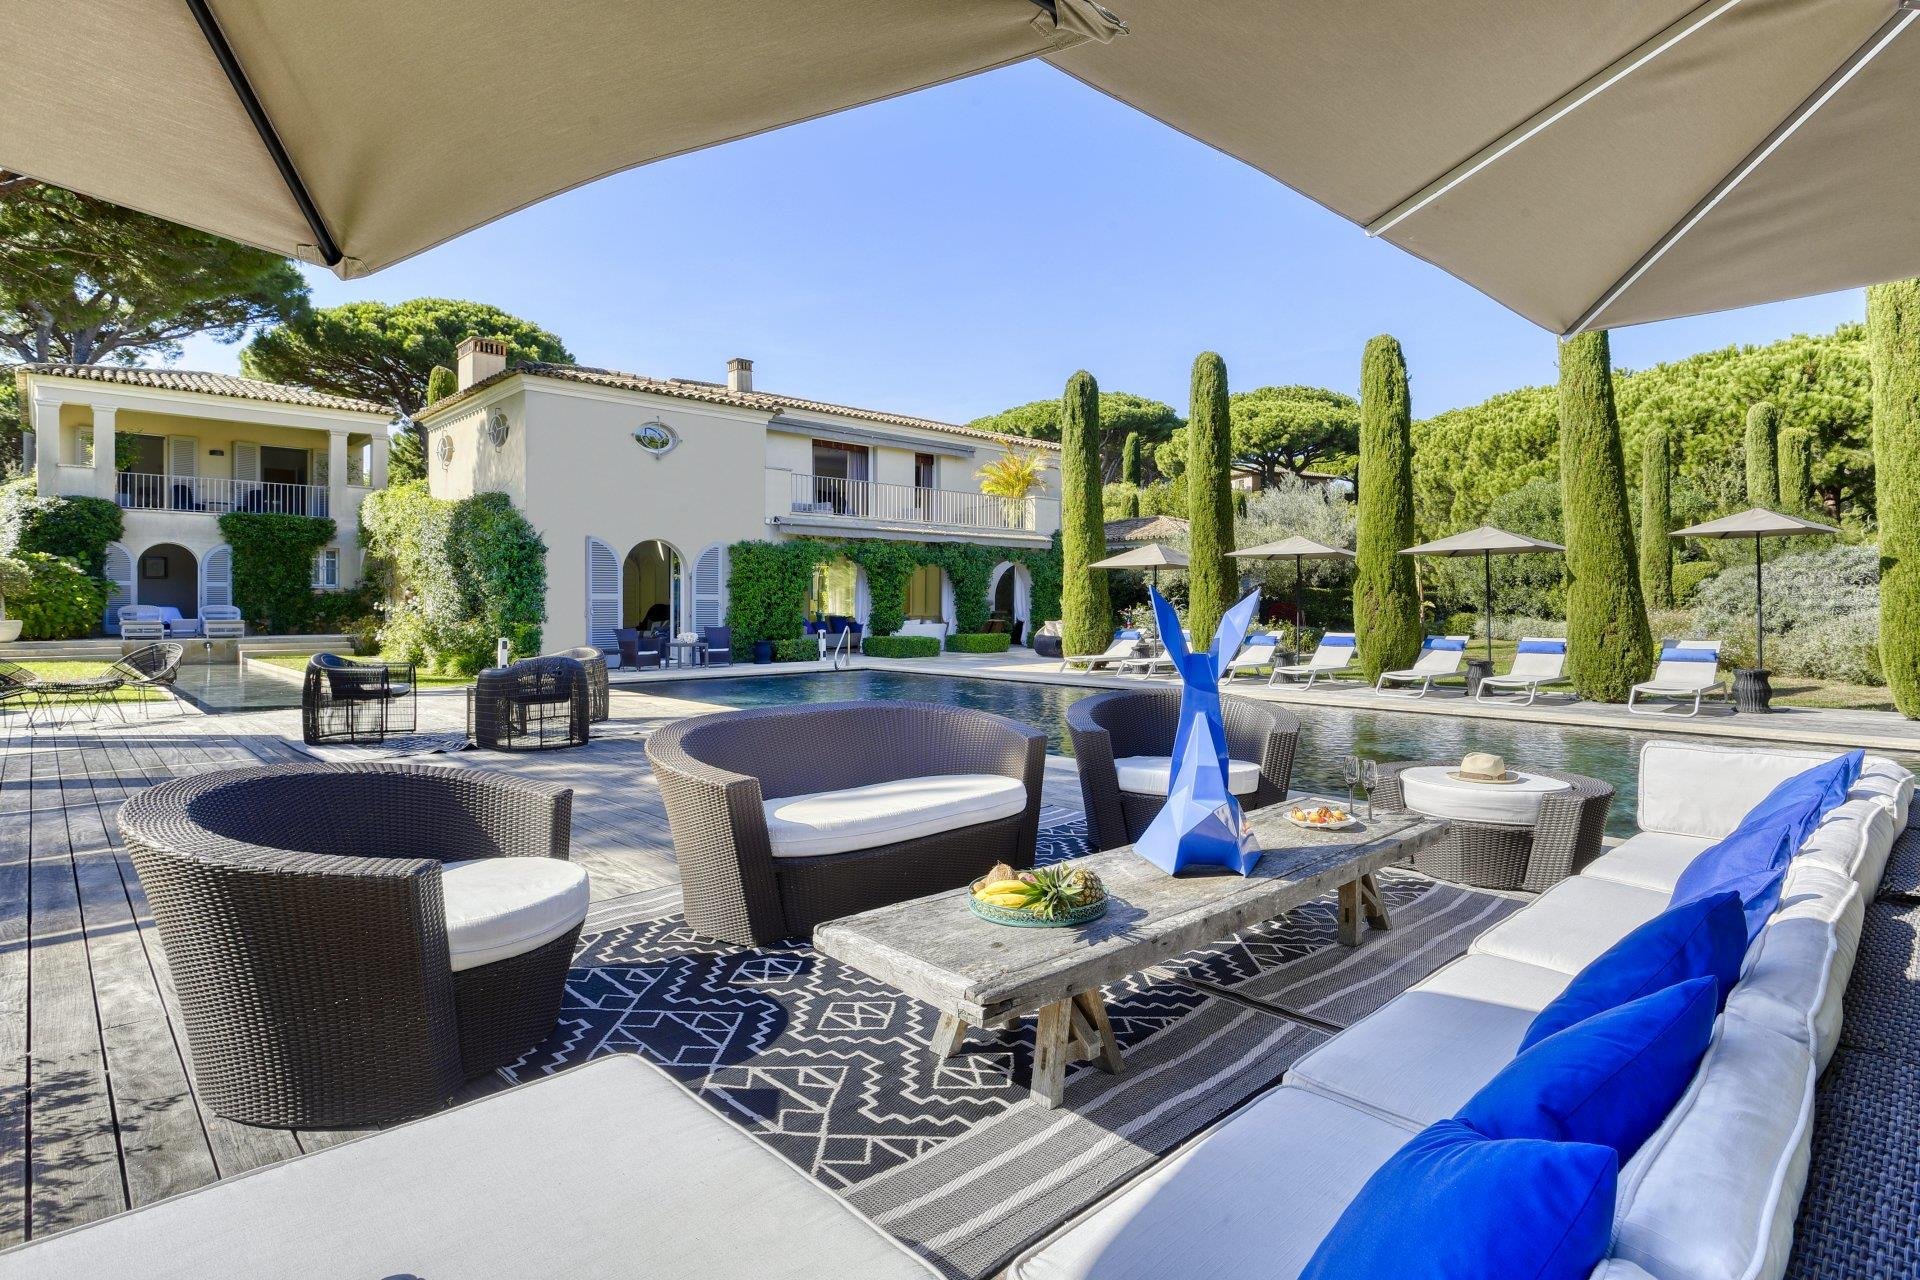 Francis York Luxurious French Riviera Villa Minutes From Saint Tropez 7.jpg